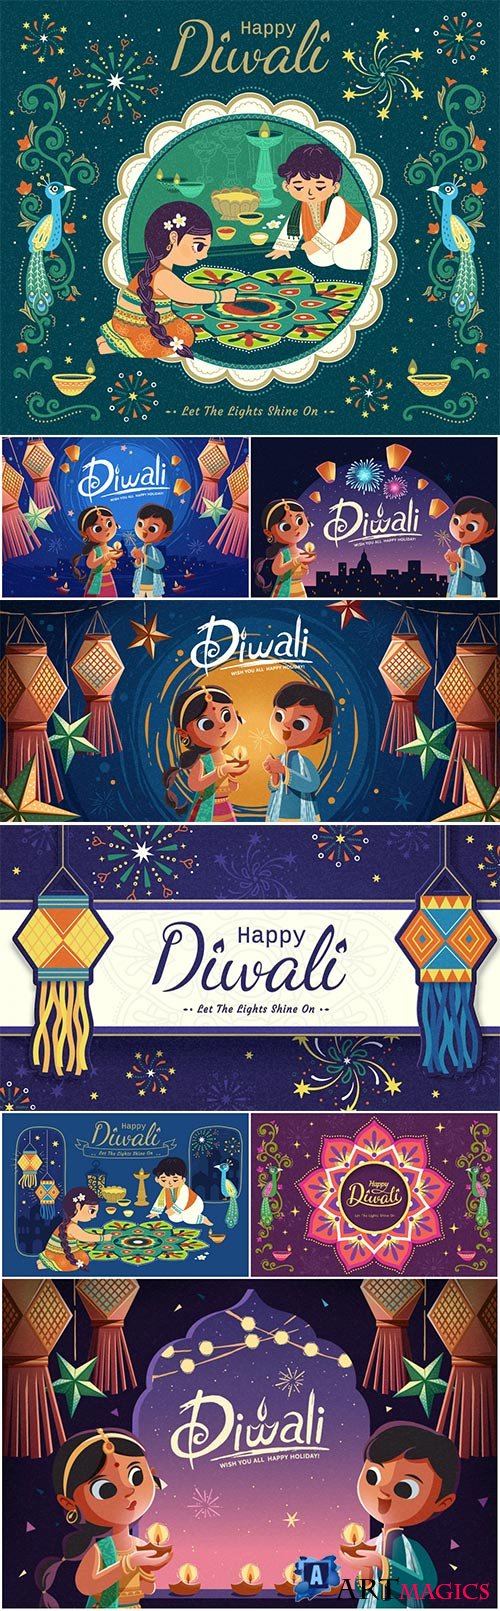 Diwali illustration with kids